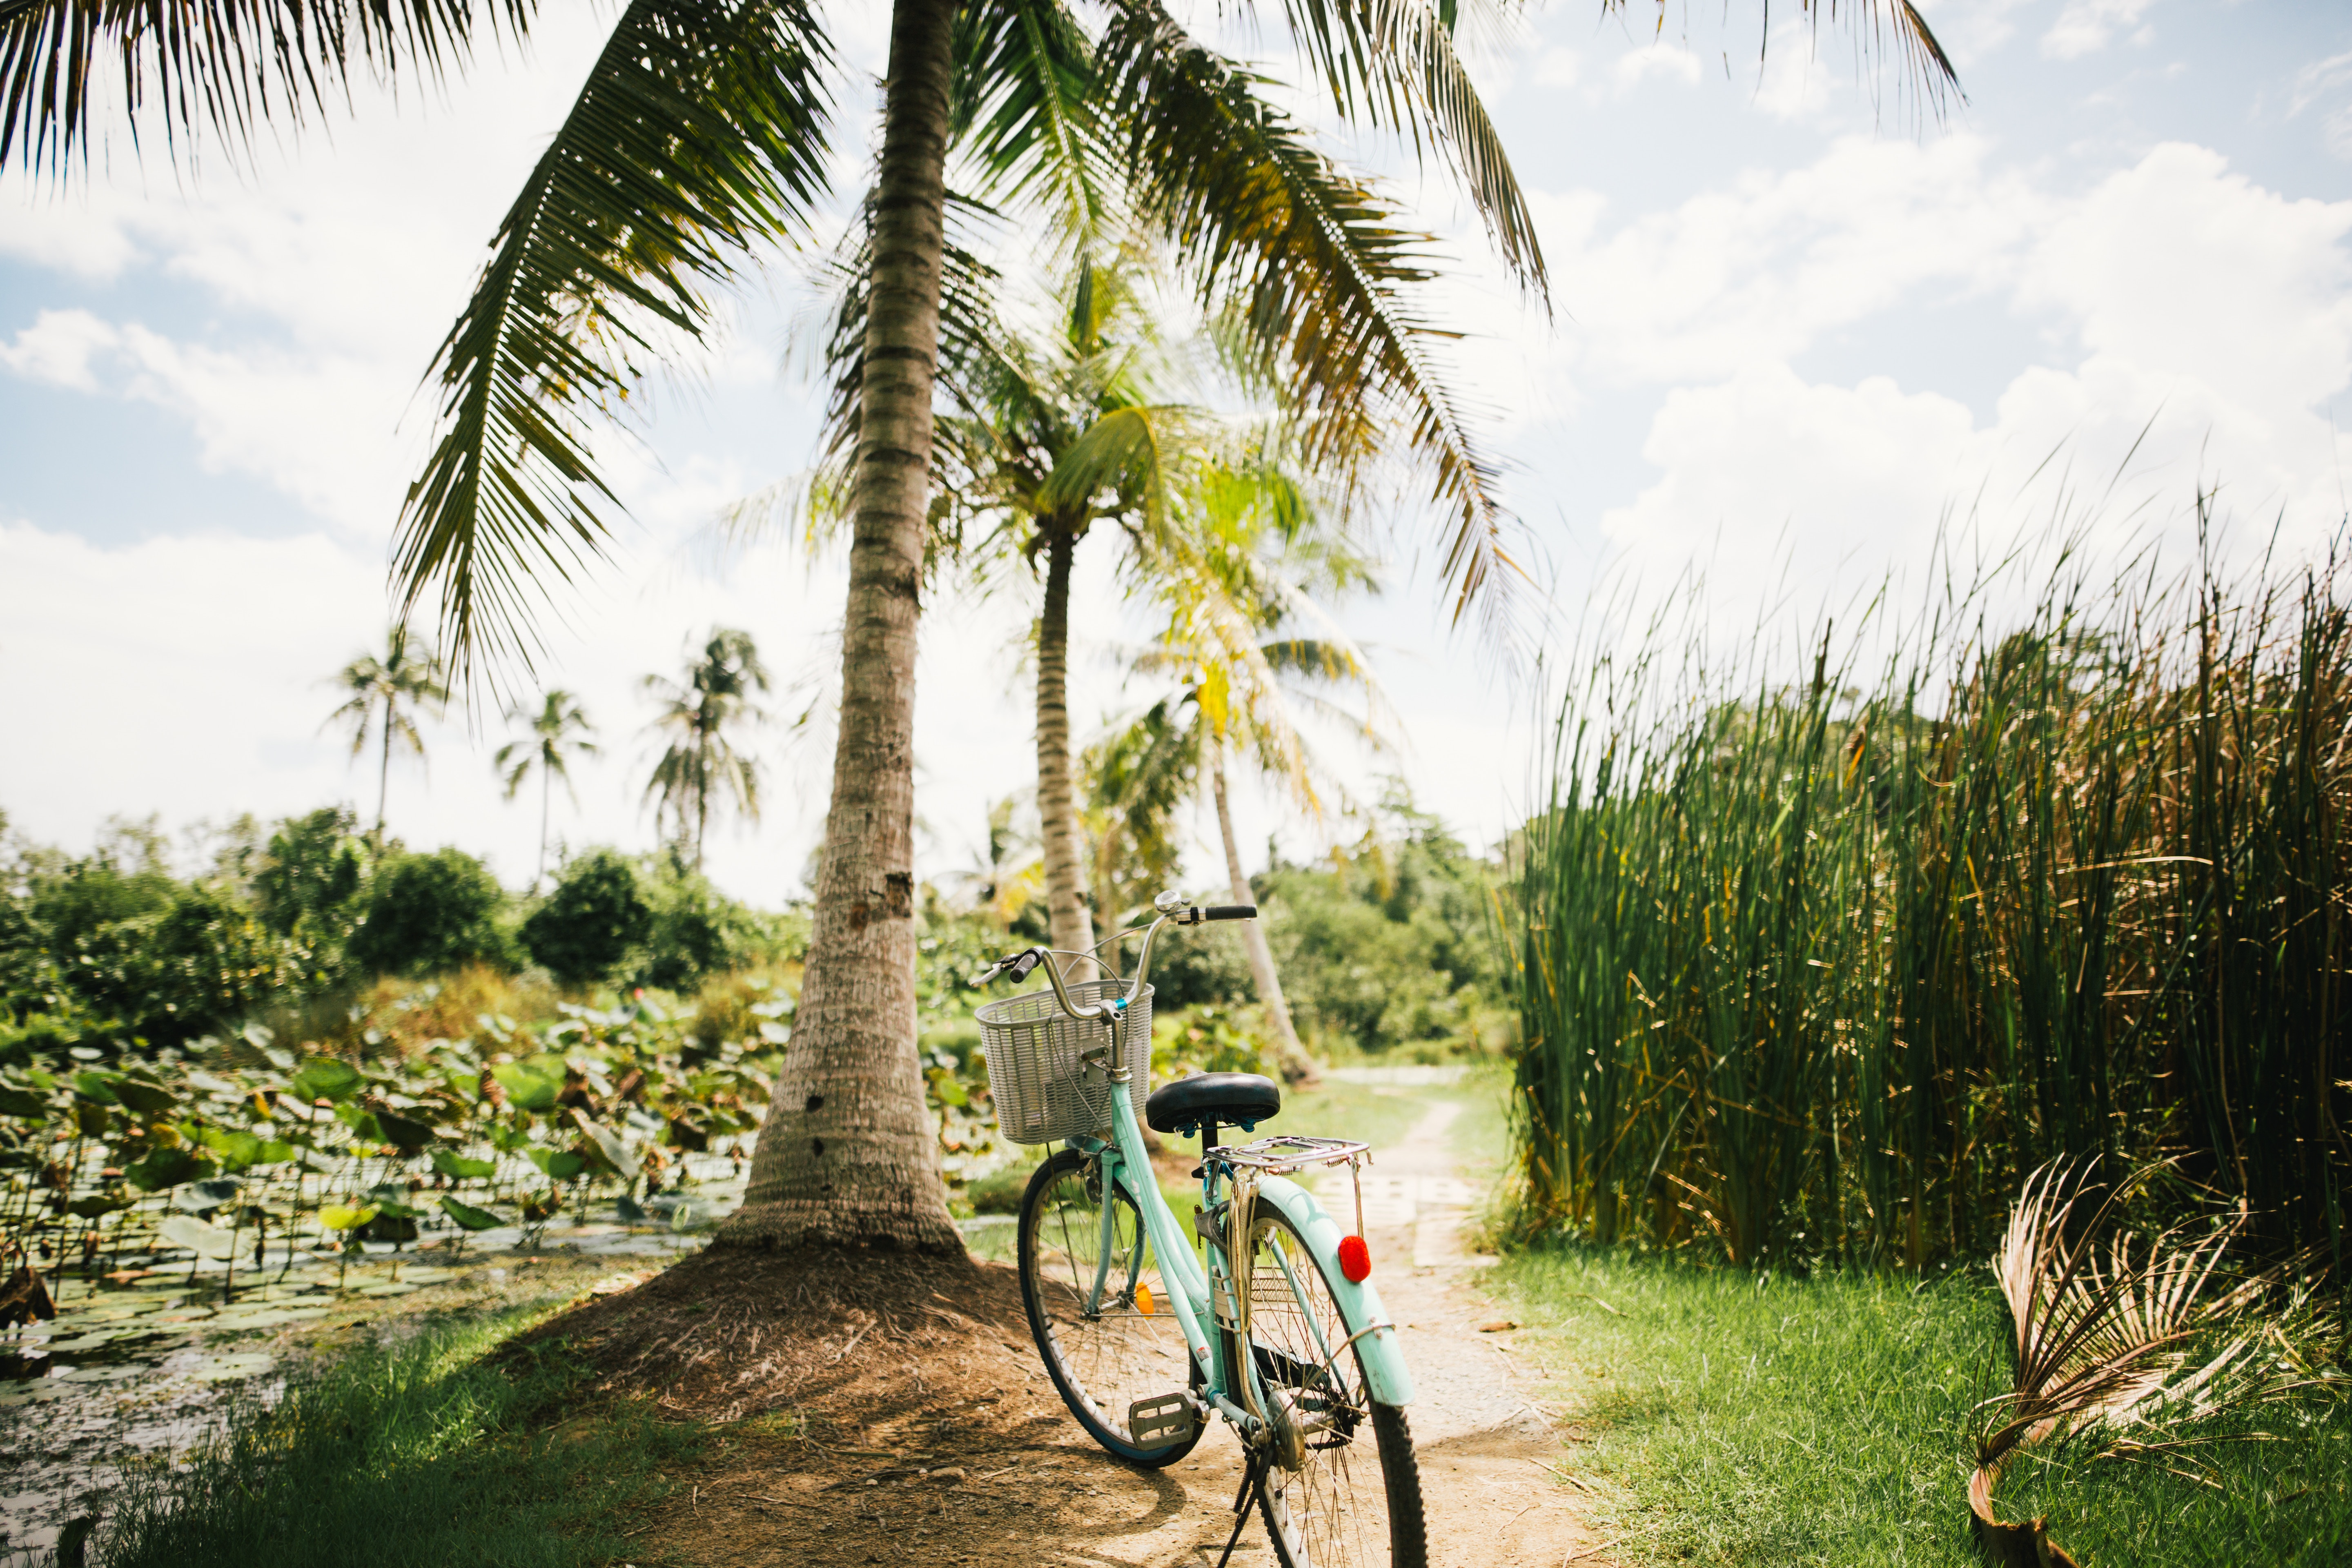 tropics, palms, miscellanea, miscellaneous, sunlight, bicycle High Definition image